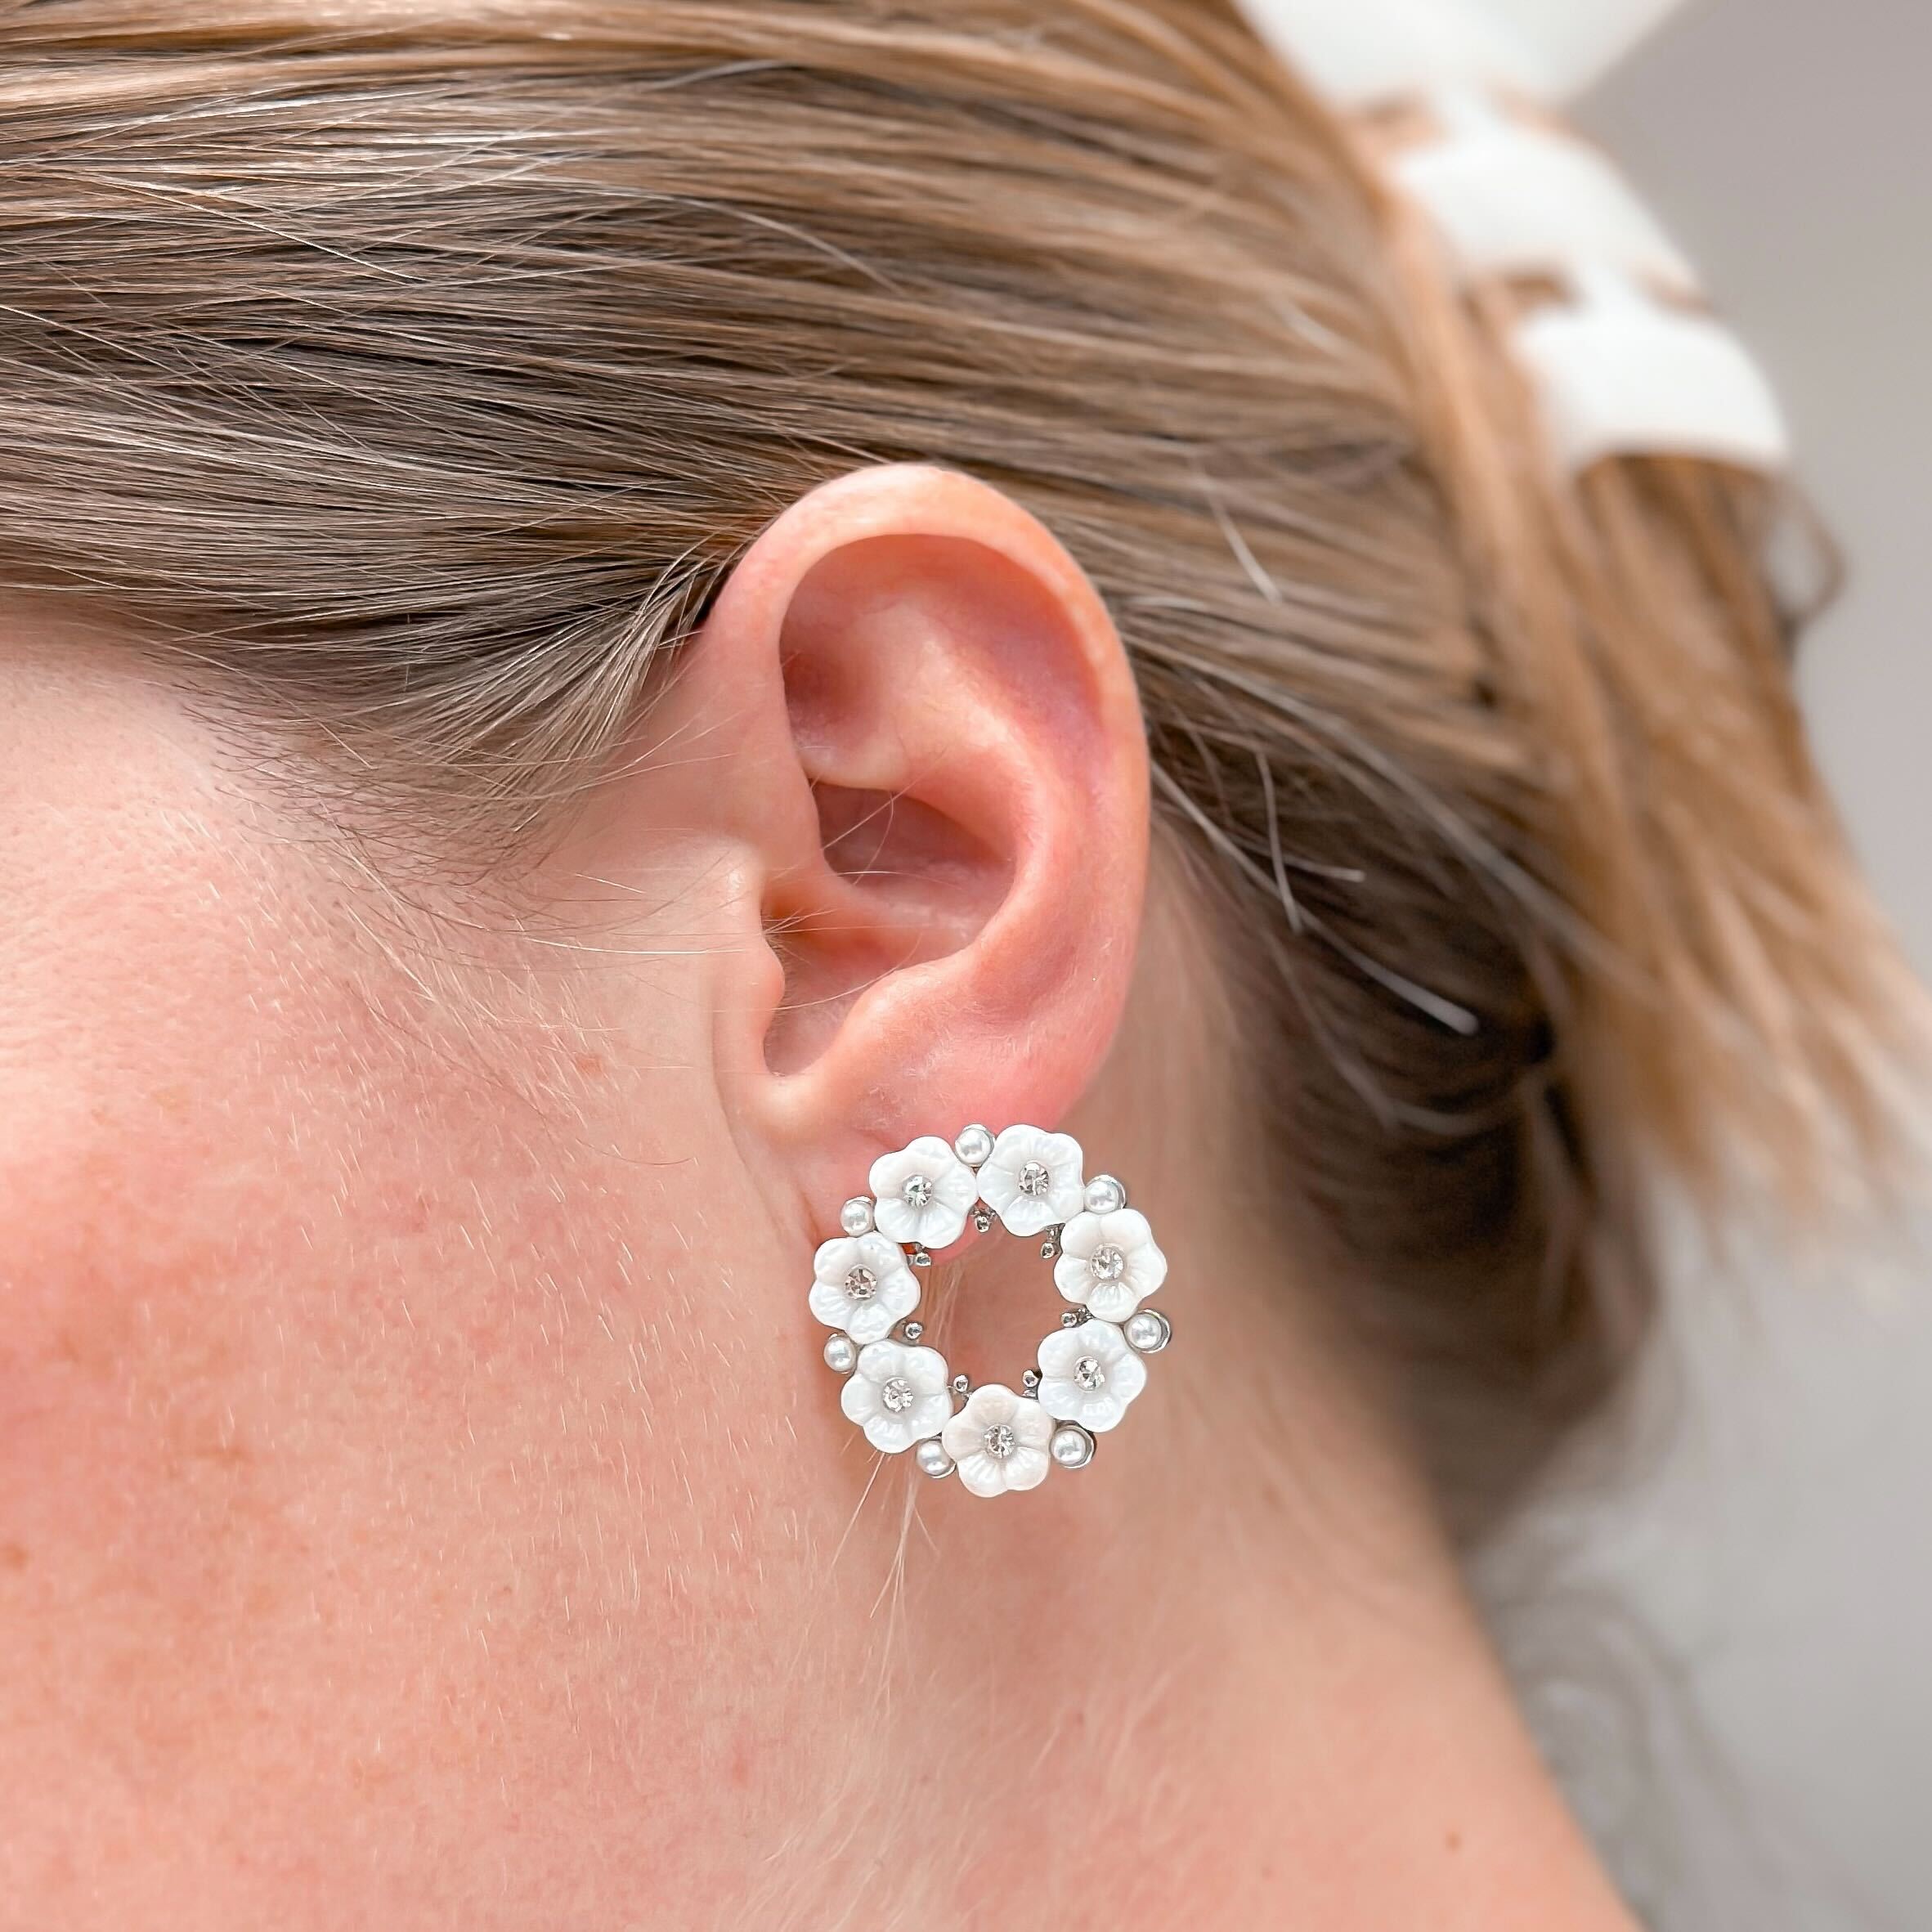 Mother of Pearl Flower Stud Earrings - Silver